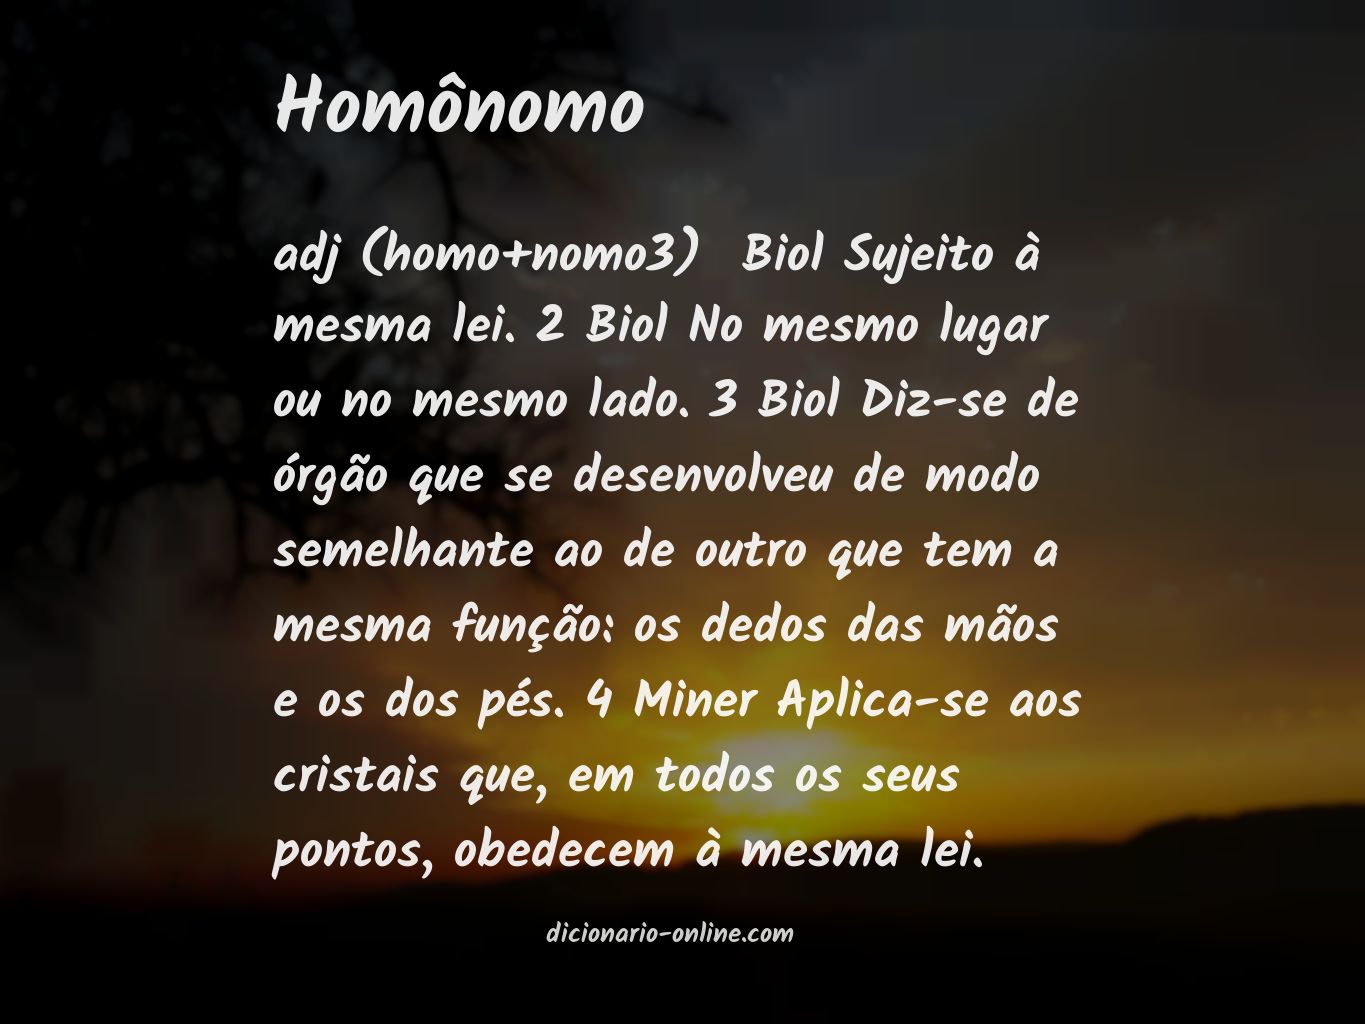 Significado de homônomo